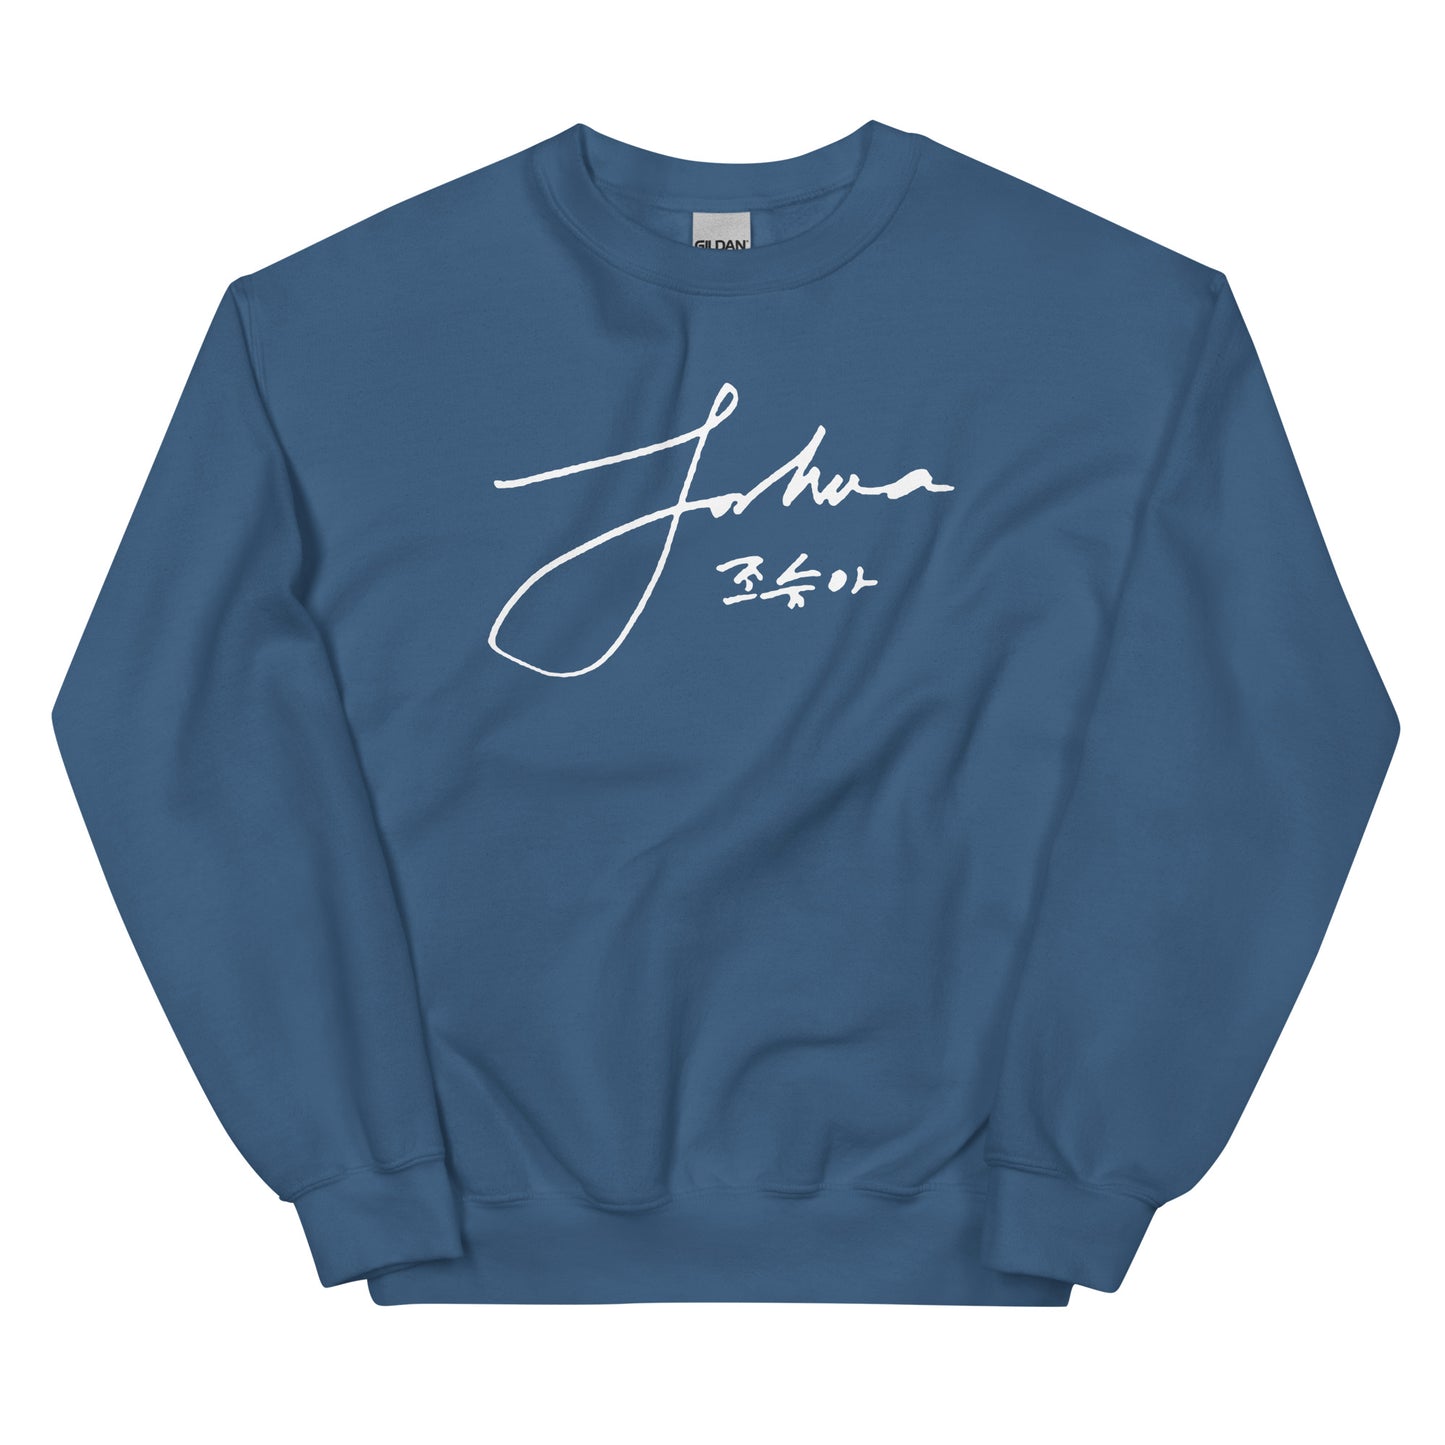 SEVENTEEN Joshua, Joshua Hong Autograph Unisex Sweatshirt